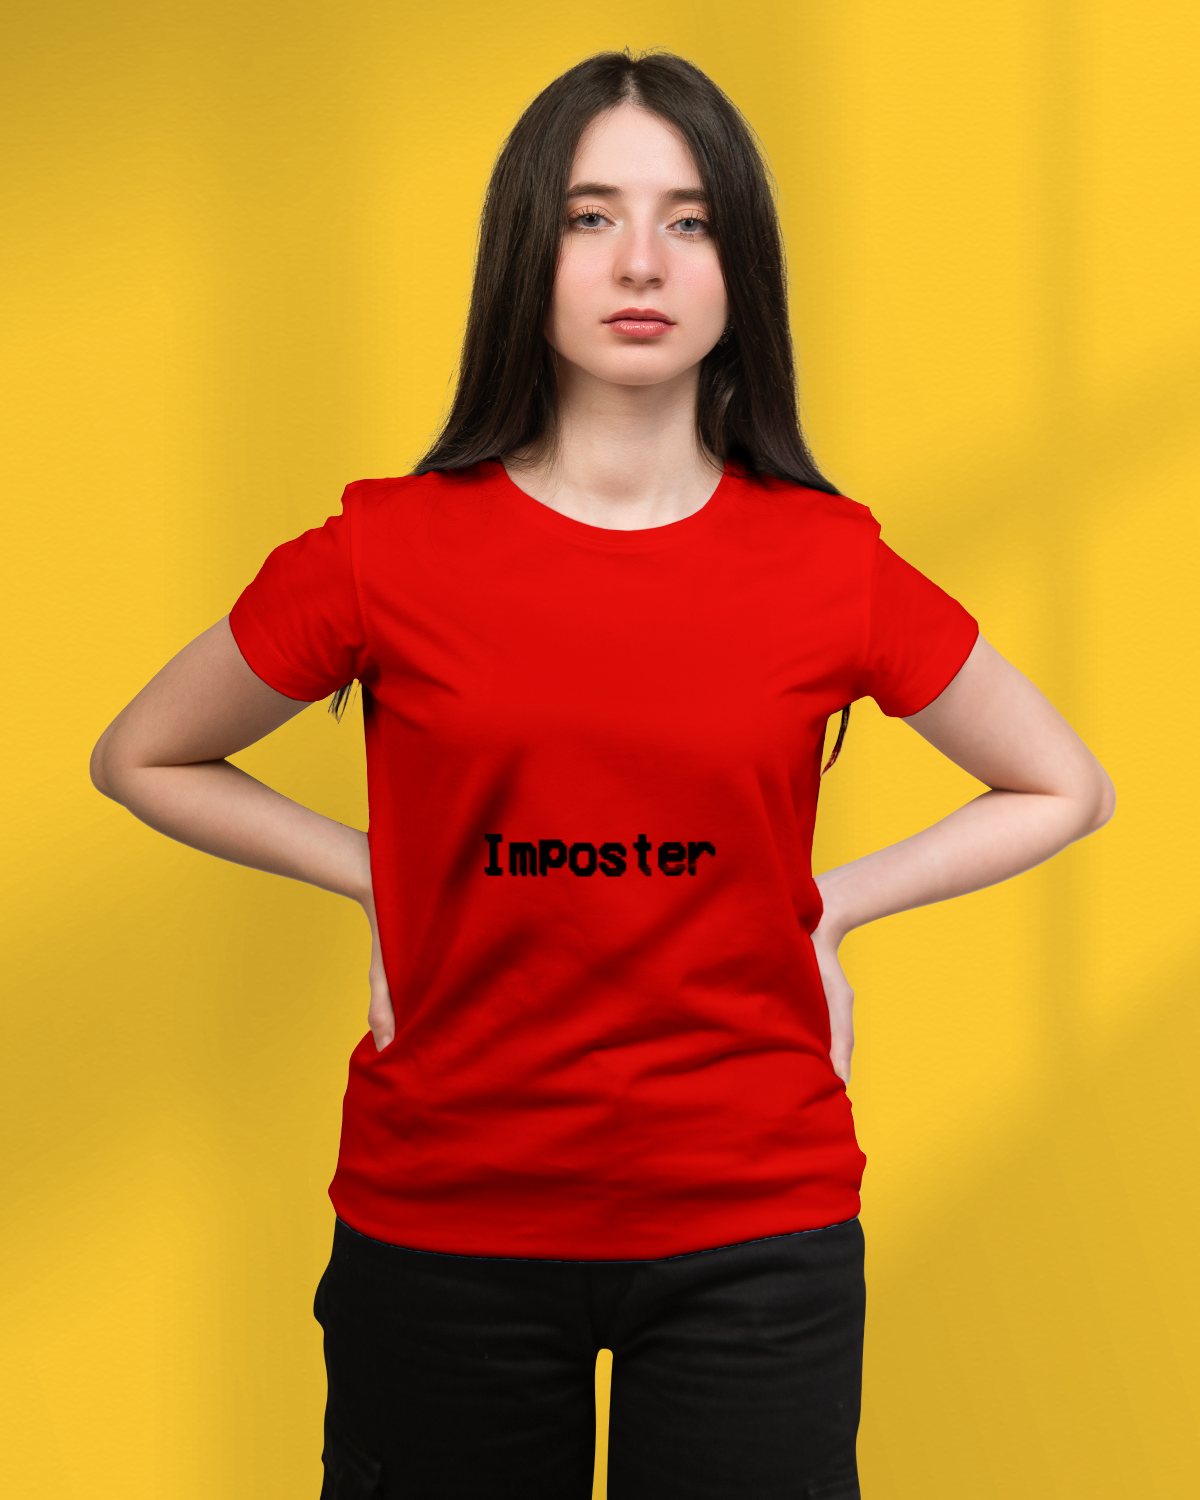 T-shirt For Women (Imposter)